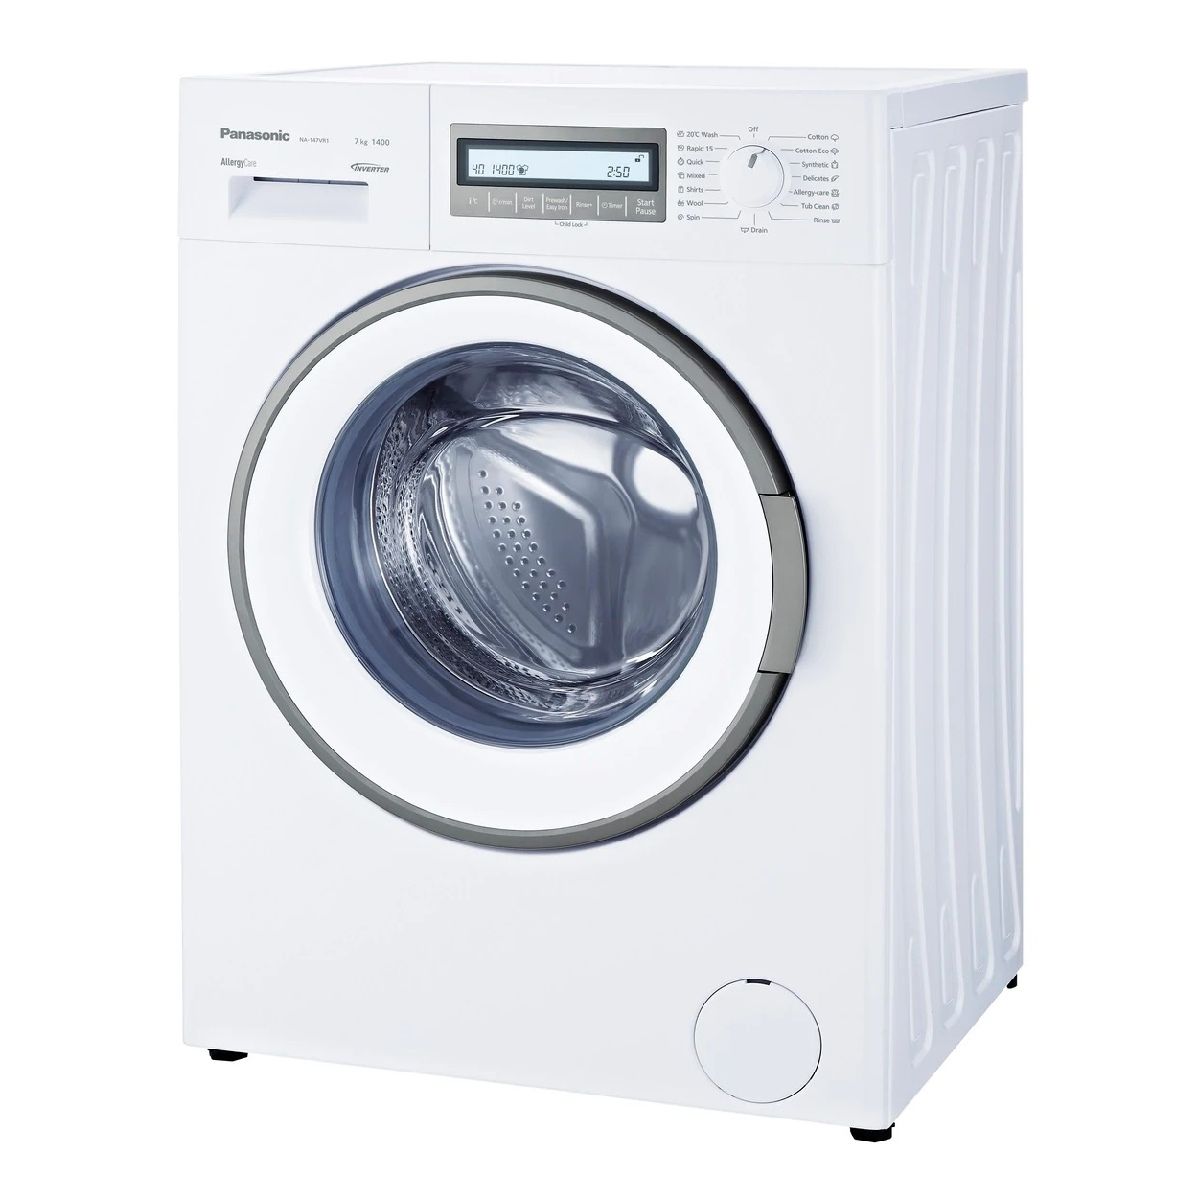 Panasonic 樂聲牌- 「愛衫號」前置式洗衣機(7公斤, 1400轉) NA-147VR1